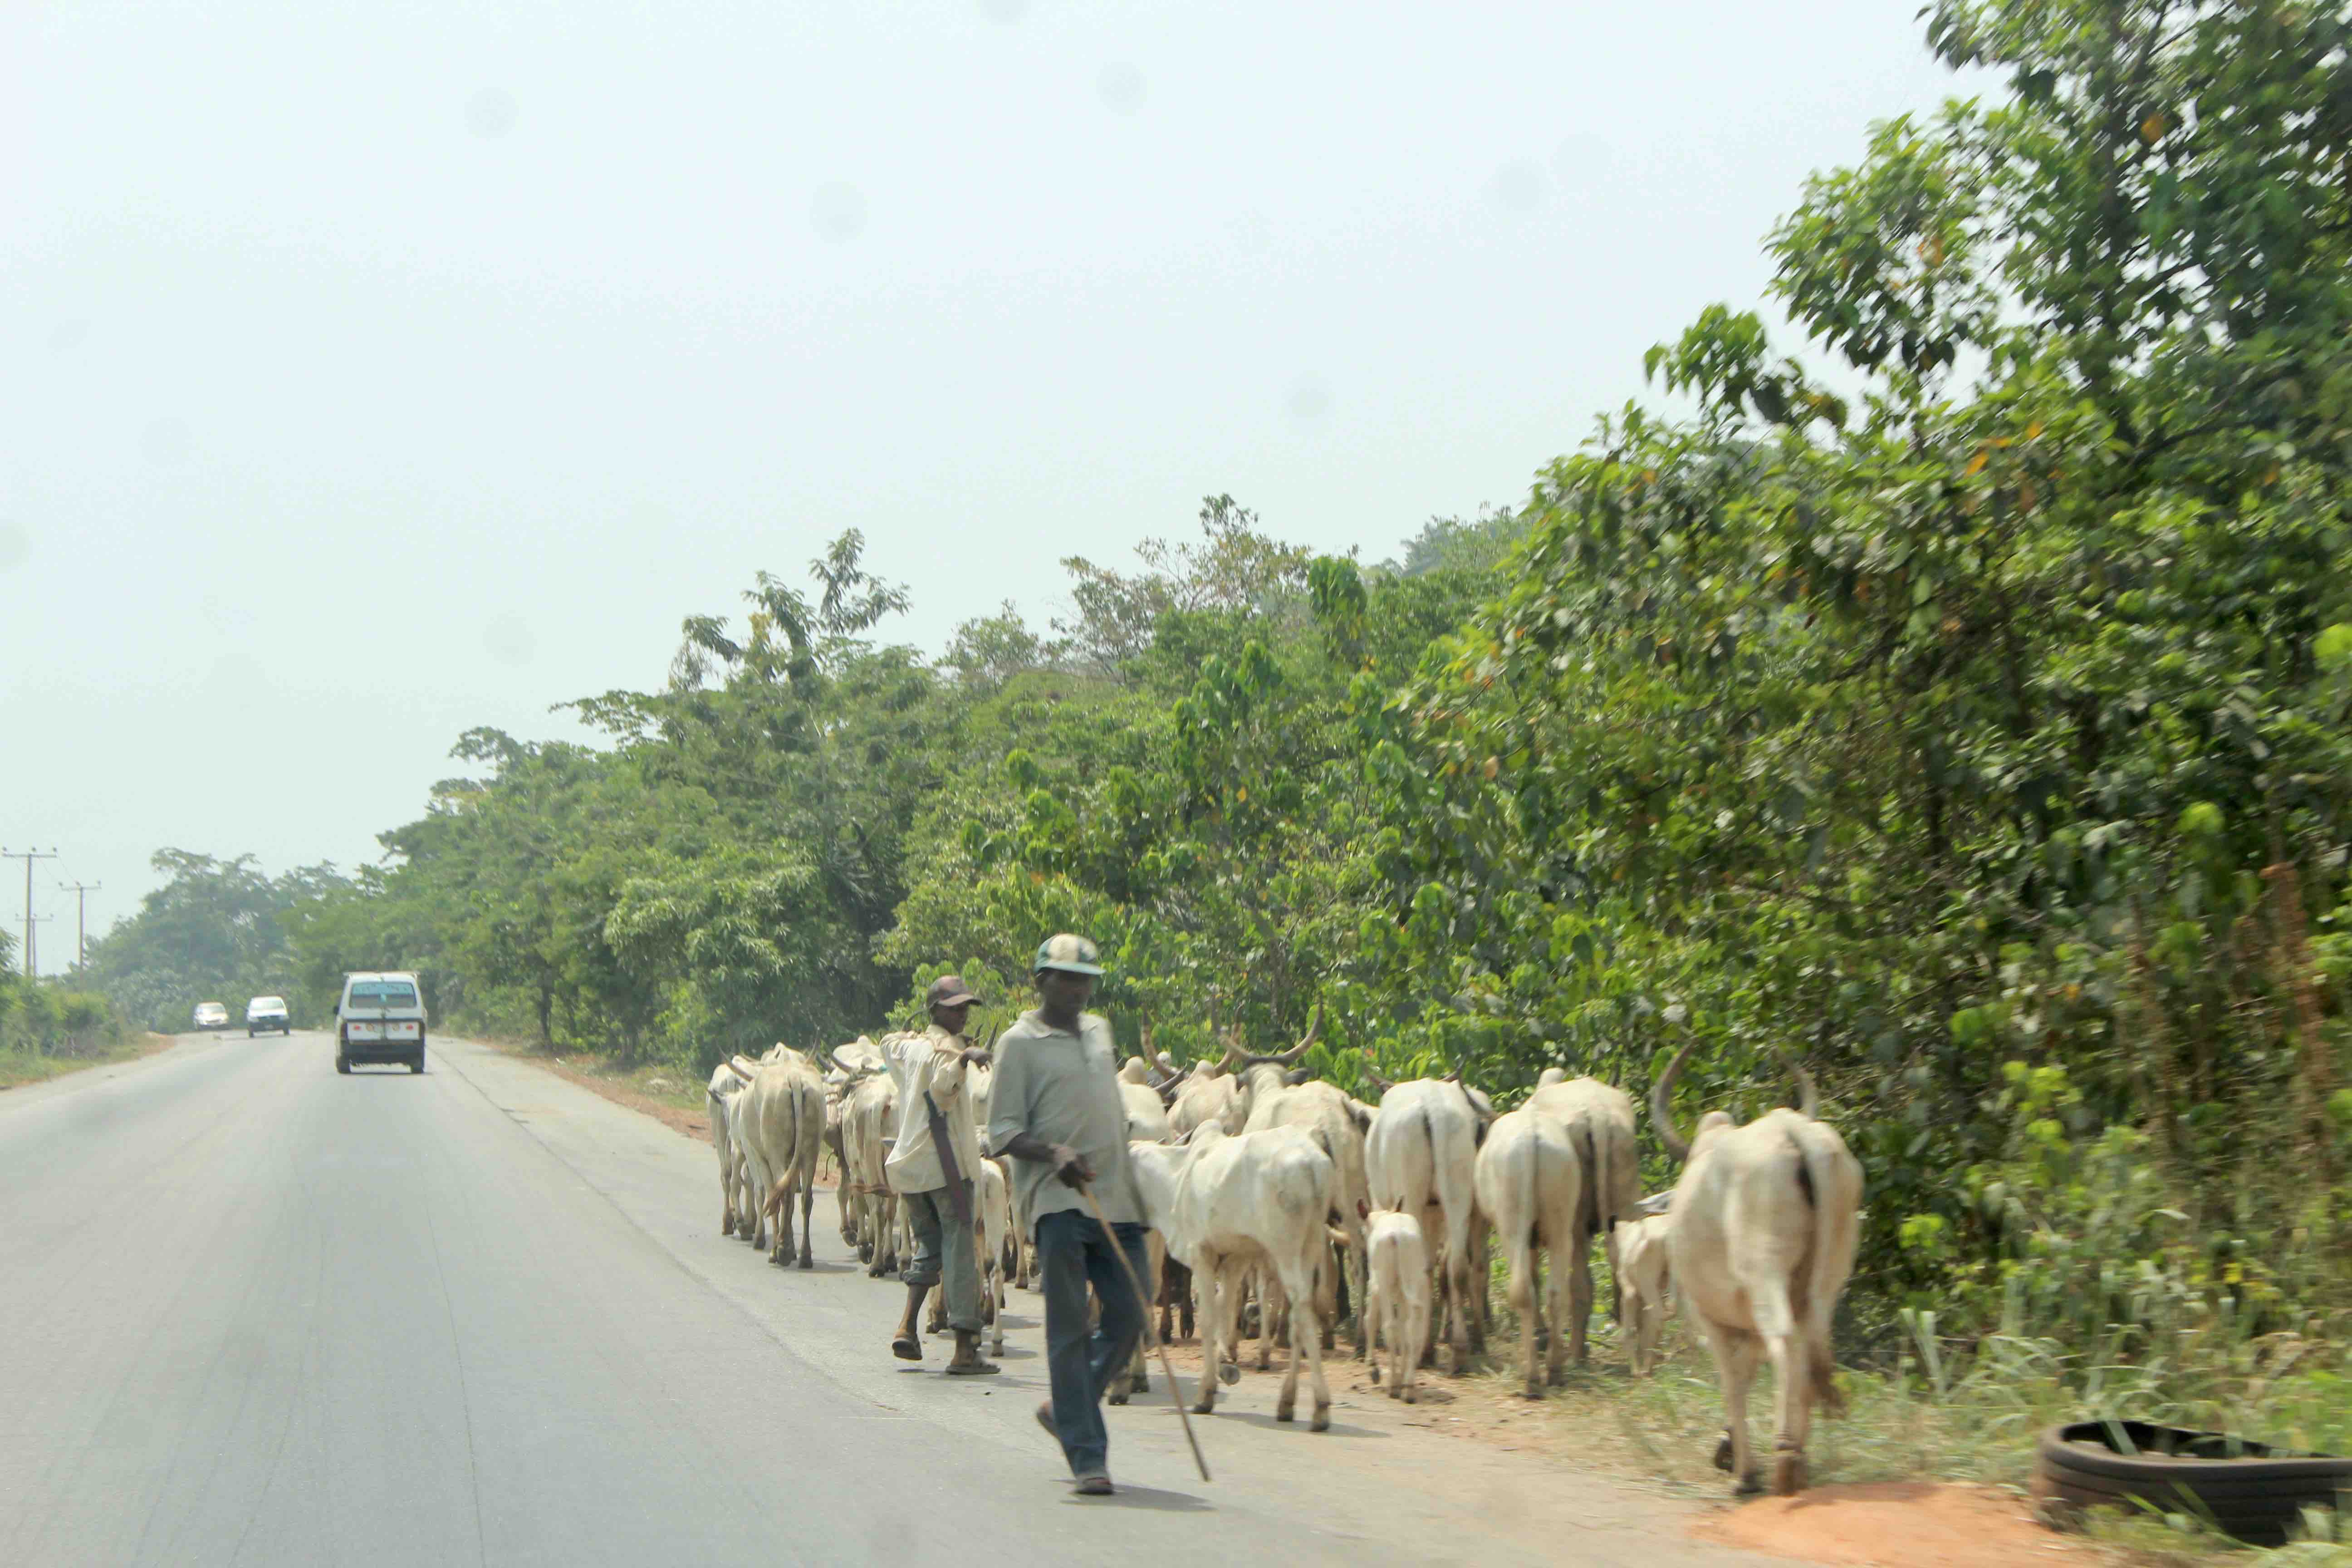 Fulani Herdsmen and cattle, Ilesa, Osun State, Nigeria. #JujuFilms